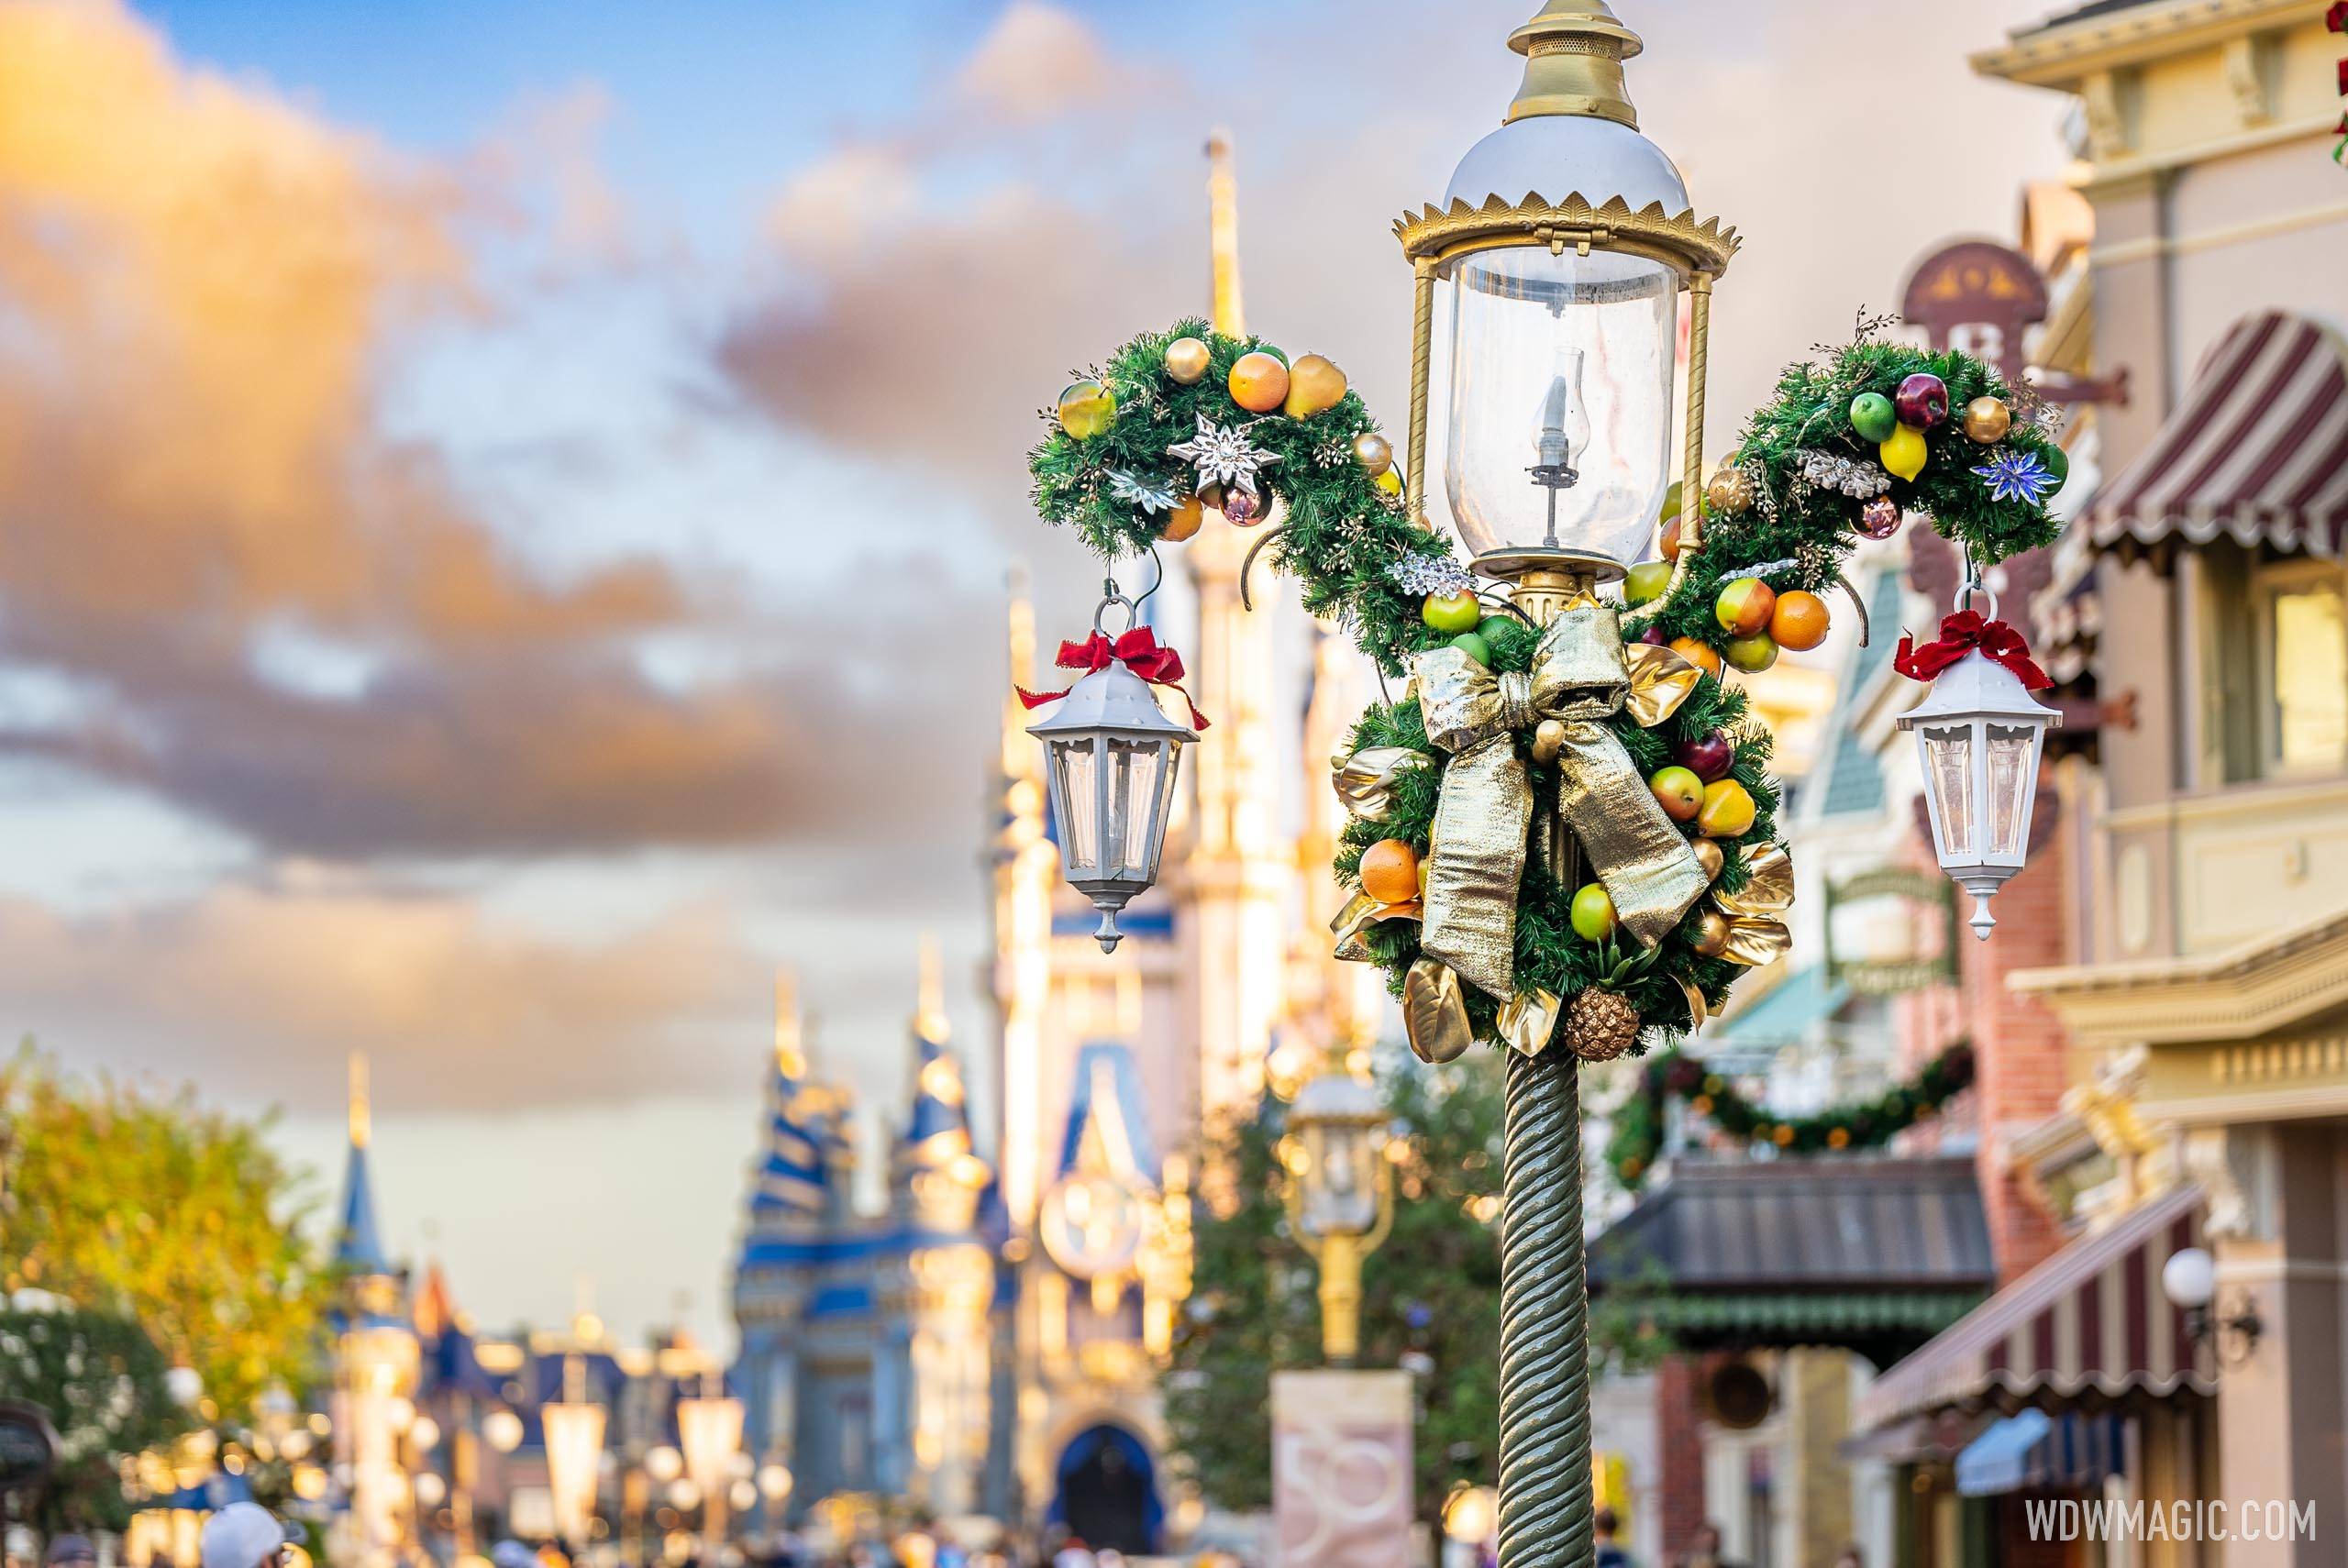 Halloween transforms into Christmas overnight at Disney World's Magic Kingdom